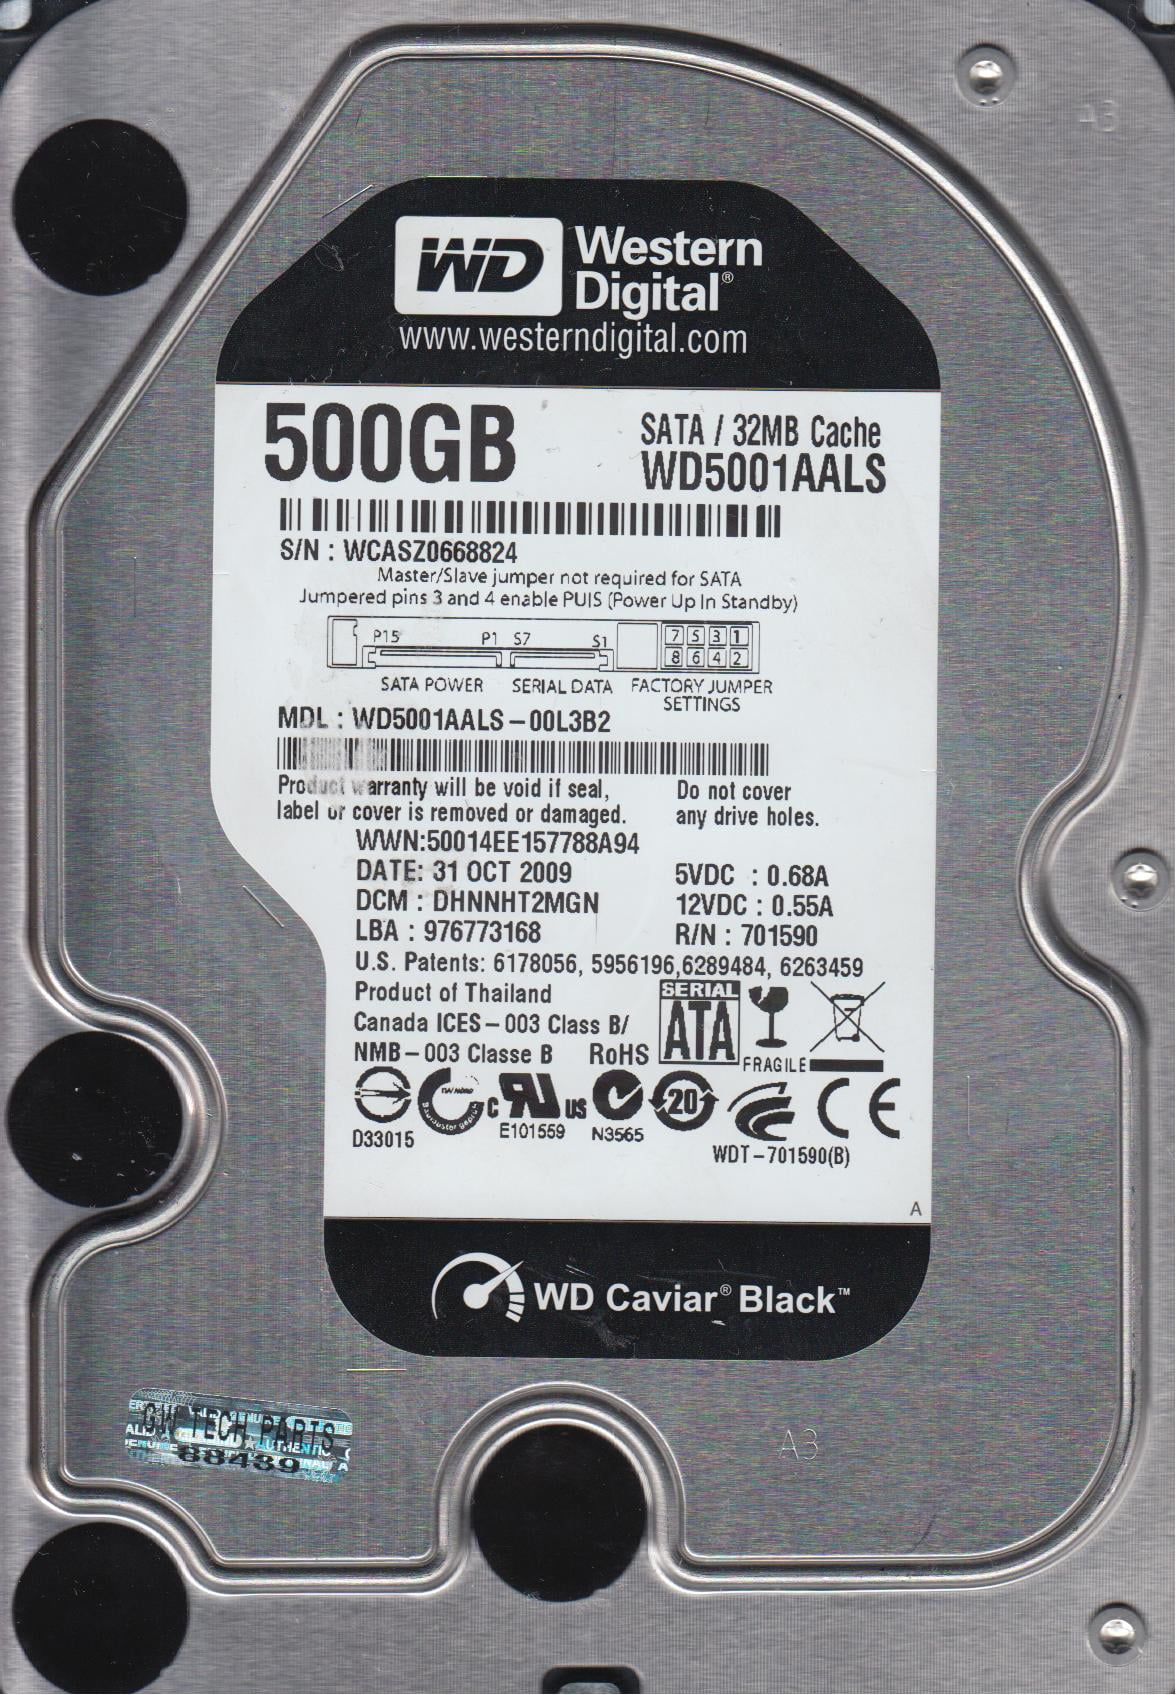 Western Digital 500GB SATA 3.5 Hard Drive WD5000AAVS-00G9B1 DCM HGNCHT2MAN 